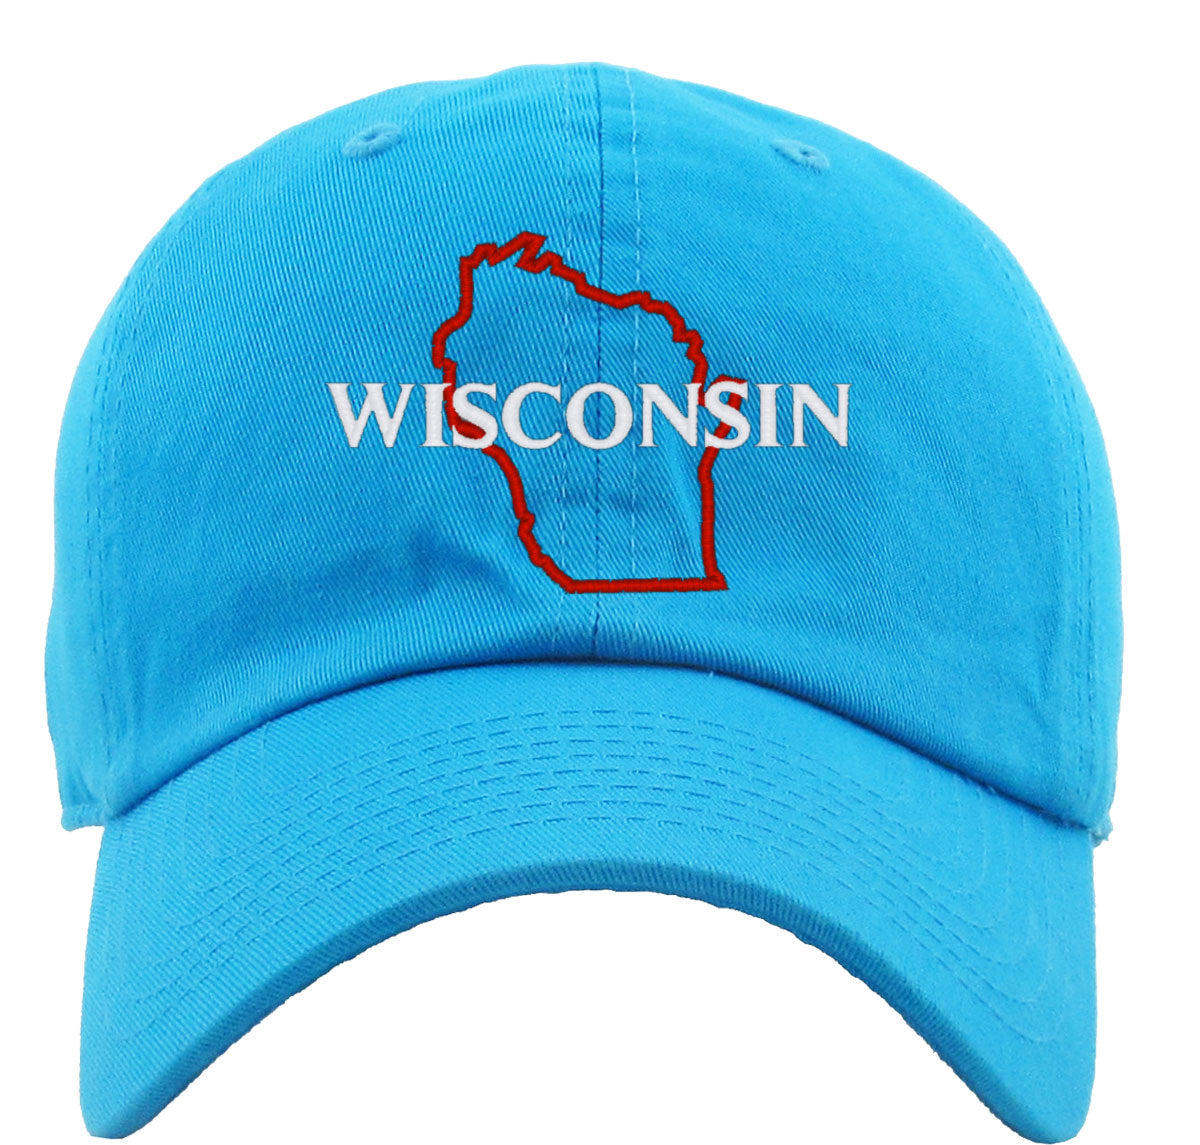 Wisconsin Premium Baseball Cap